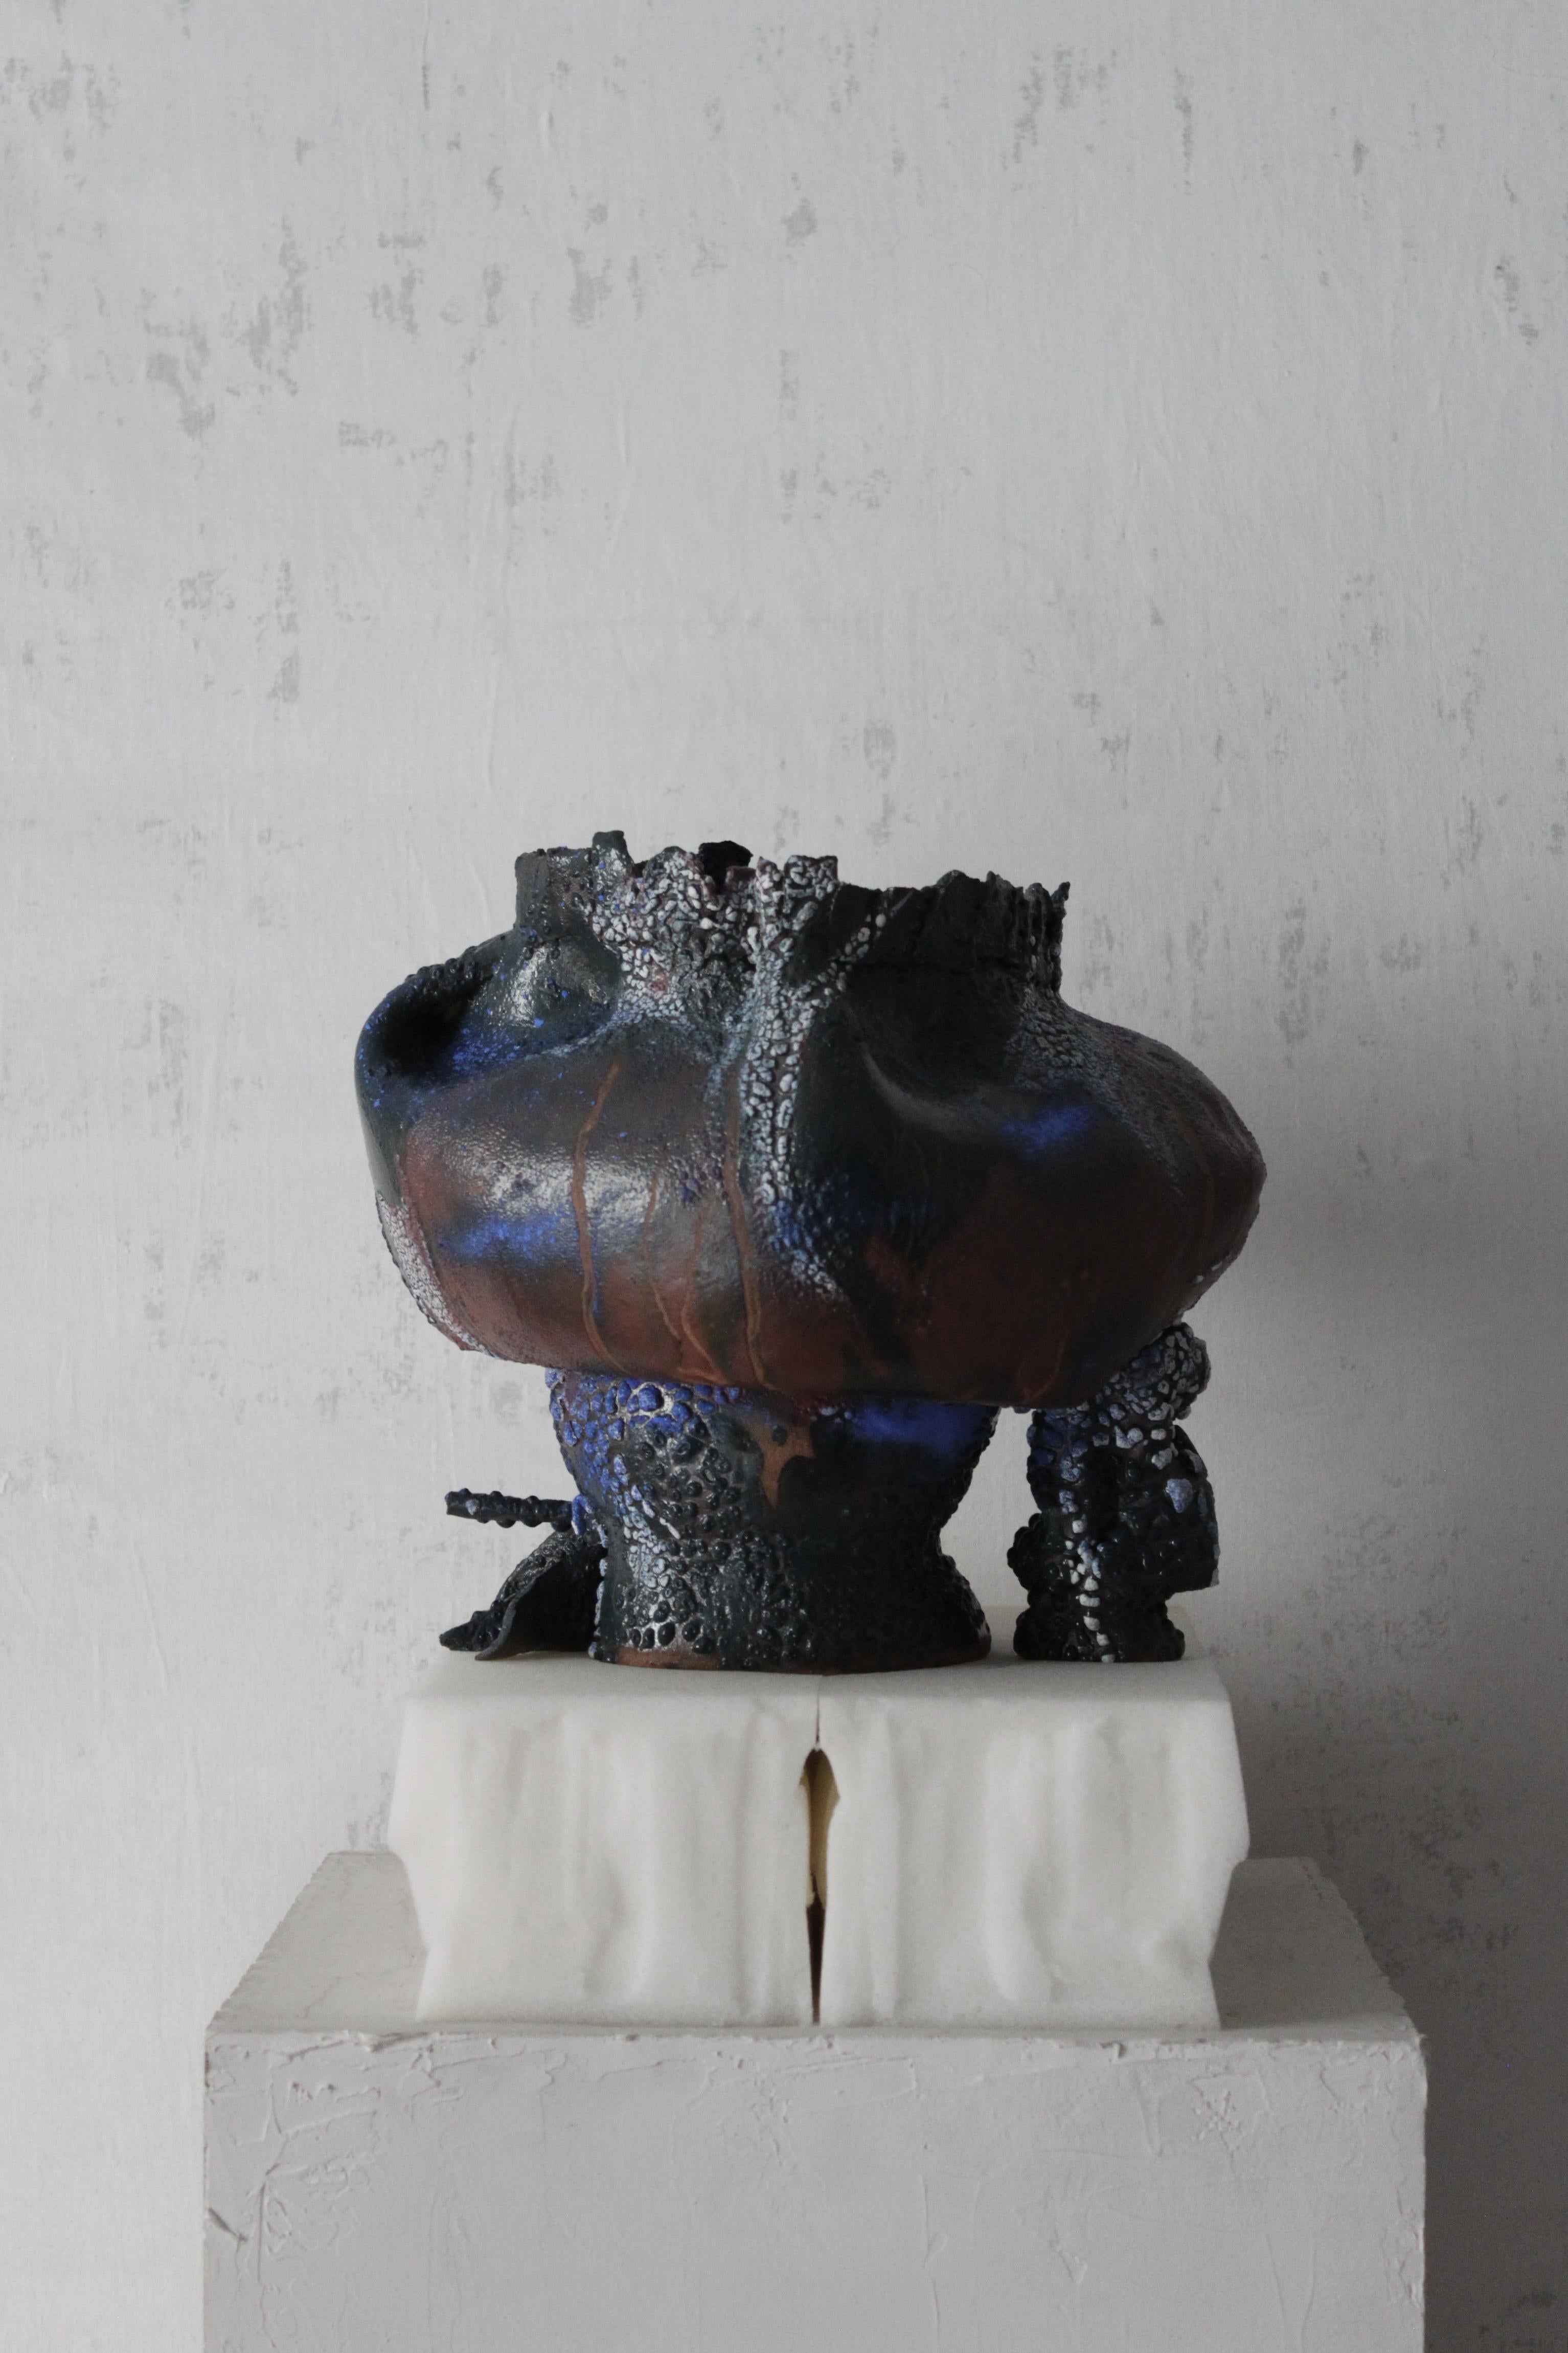 Phorcy vase by lava studio ceramics.
Unique, 2020
Materials: Glazed stoneware
Dimensions: H 23 cm x D 25 cm

Lava ceramics is a collective studio based in Athens.